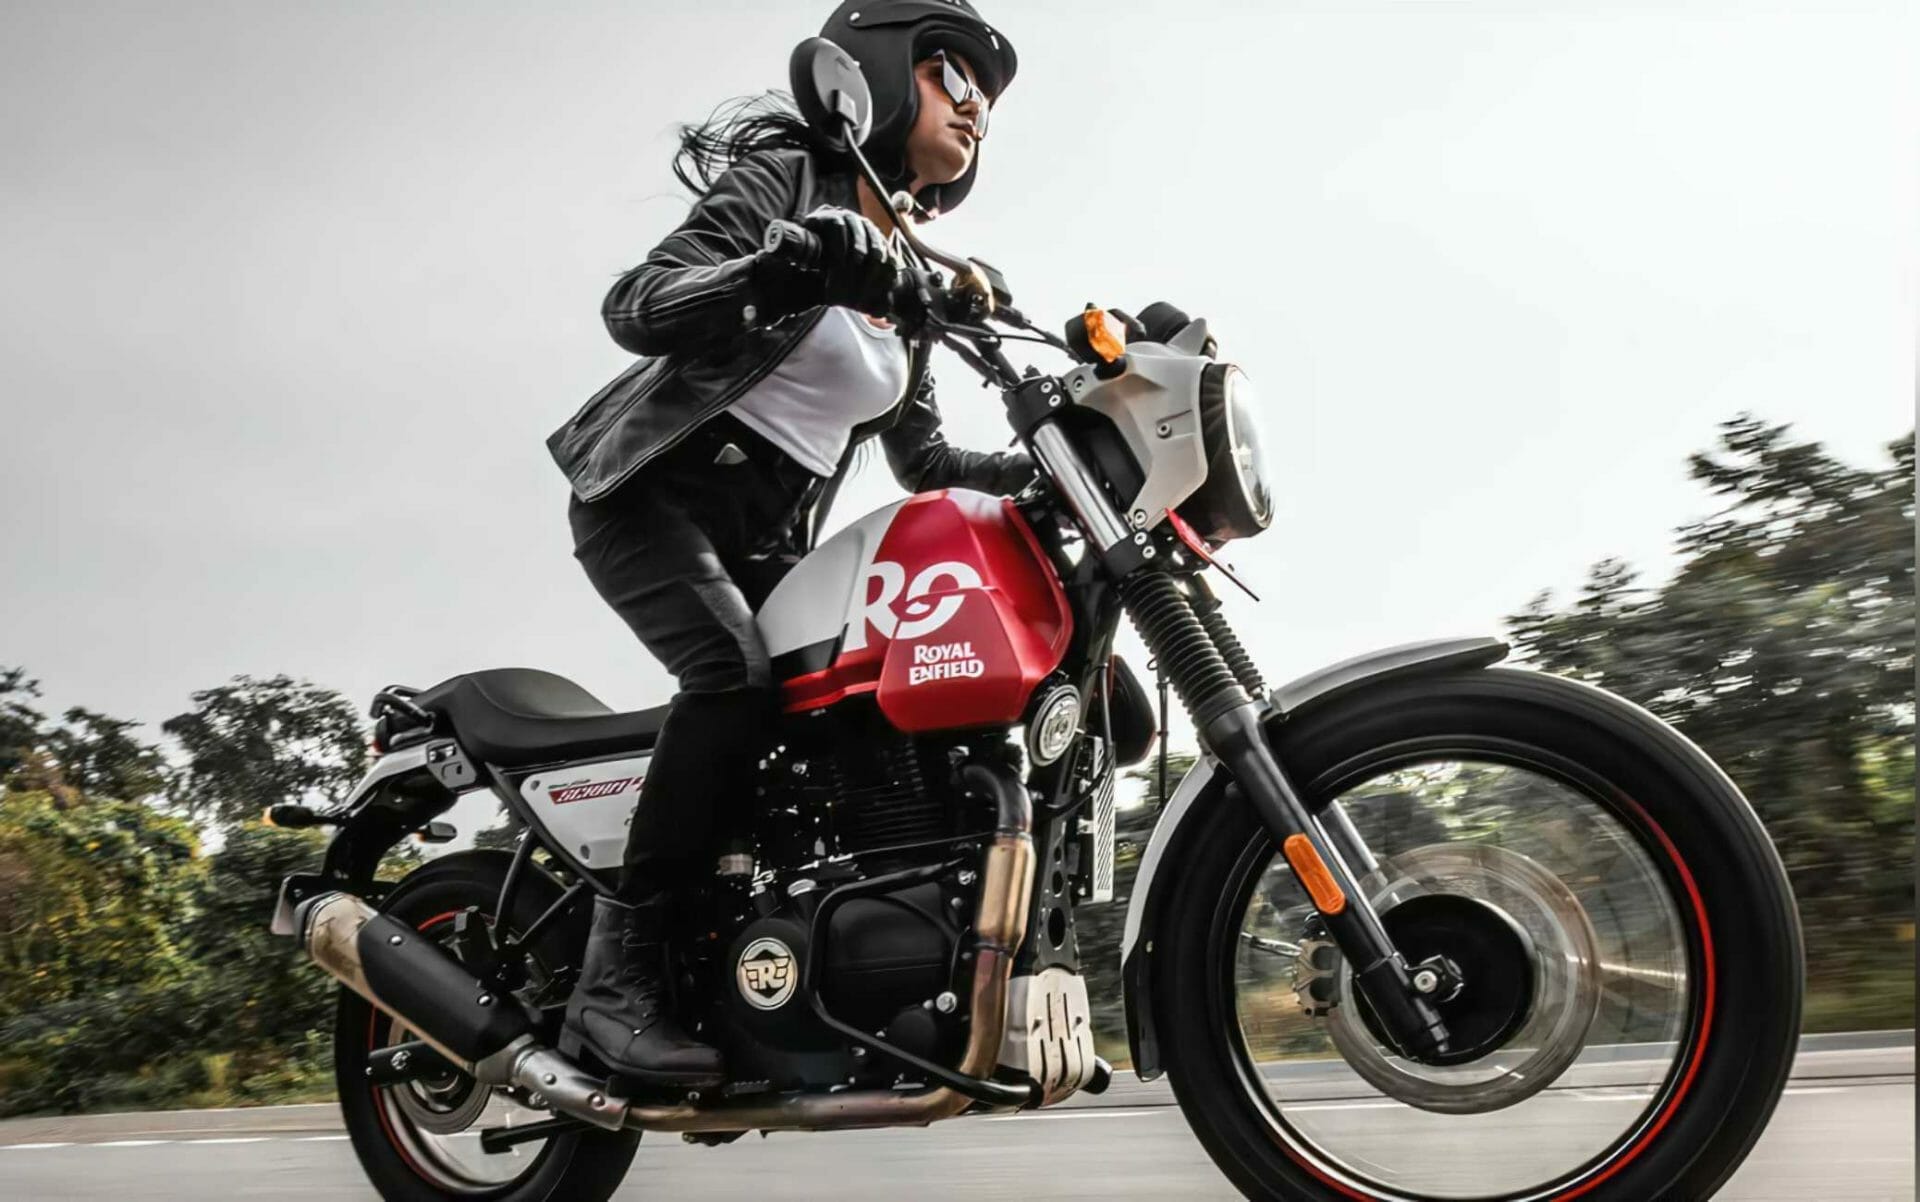 Royal Enfield Scram 411 presented
- also in the MOTORCYCLES.NEWS APP via @motorradnachrichten